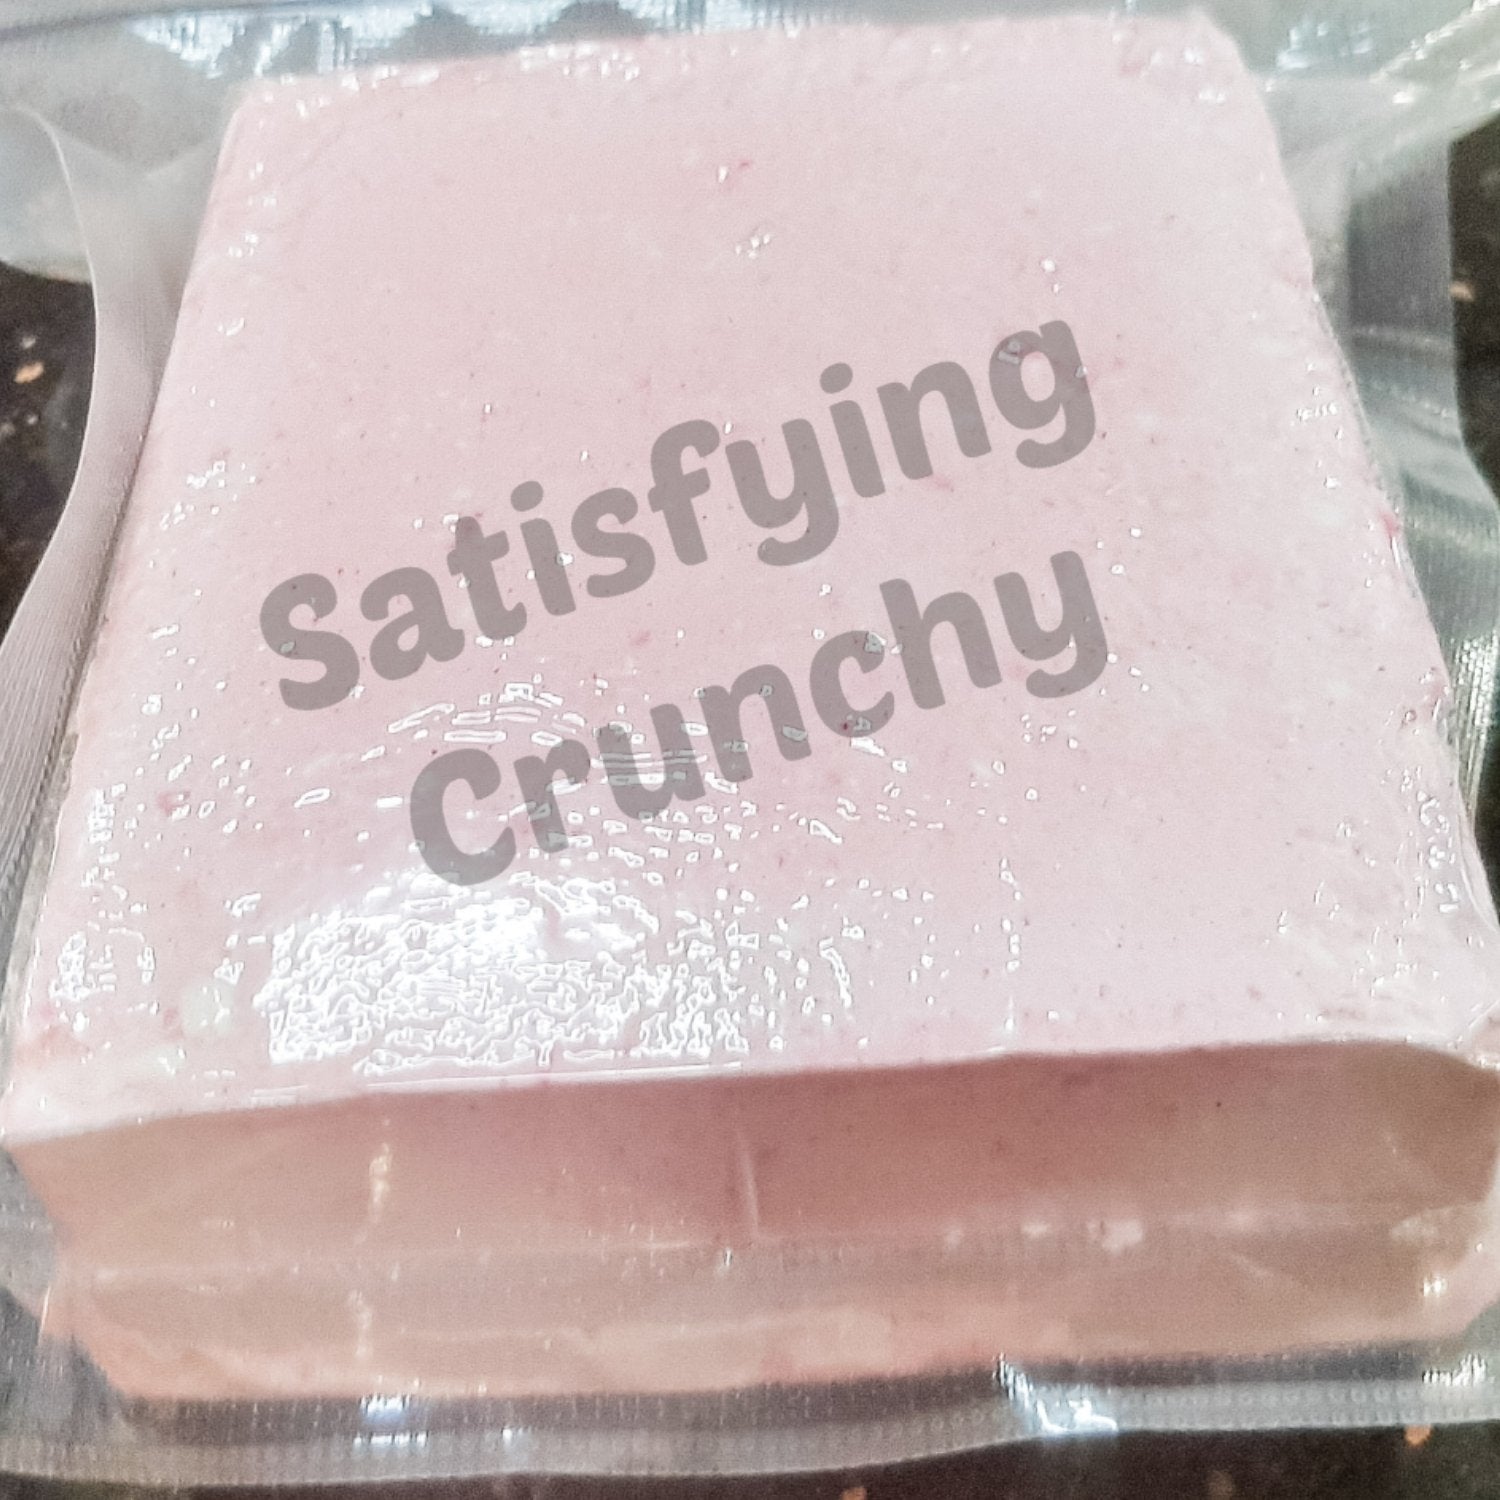 PRESSED Cornstarch Brick – Satisfying Crunchy